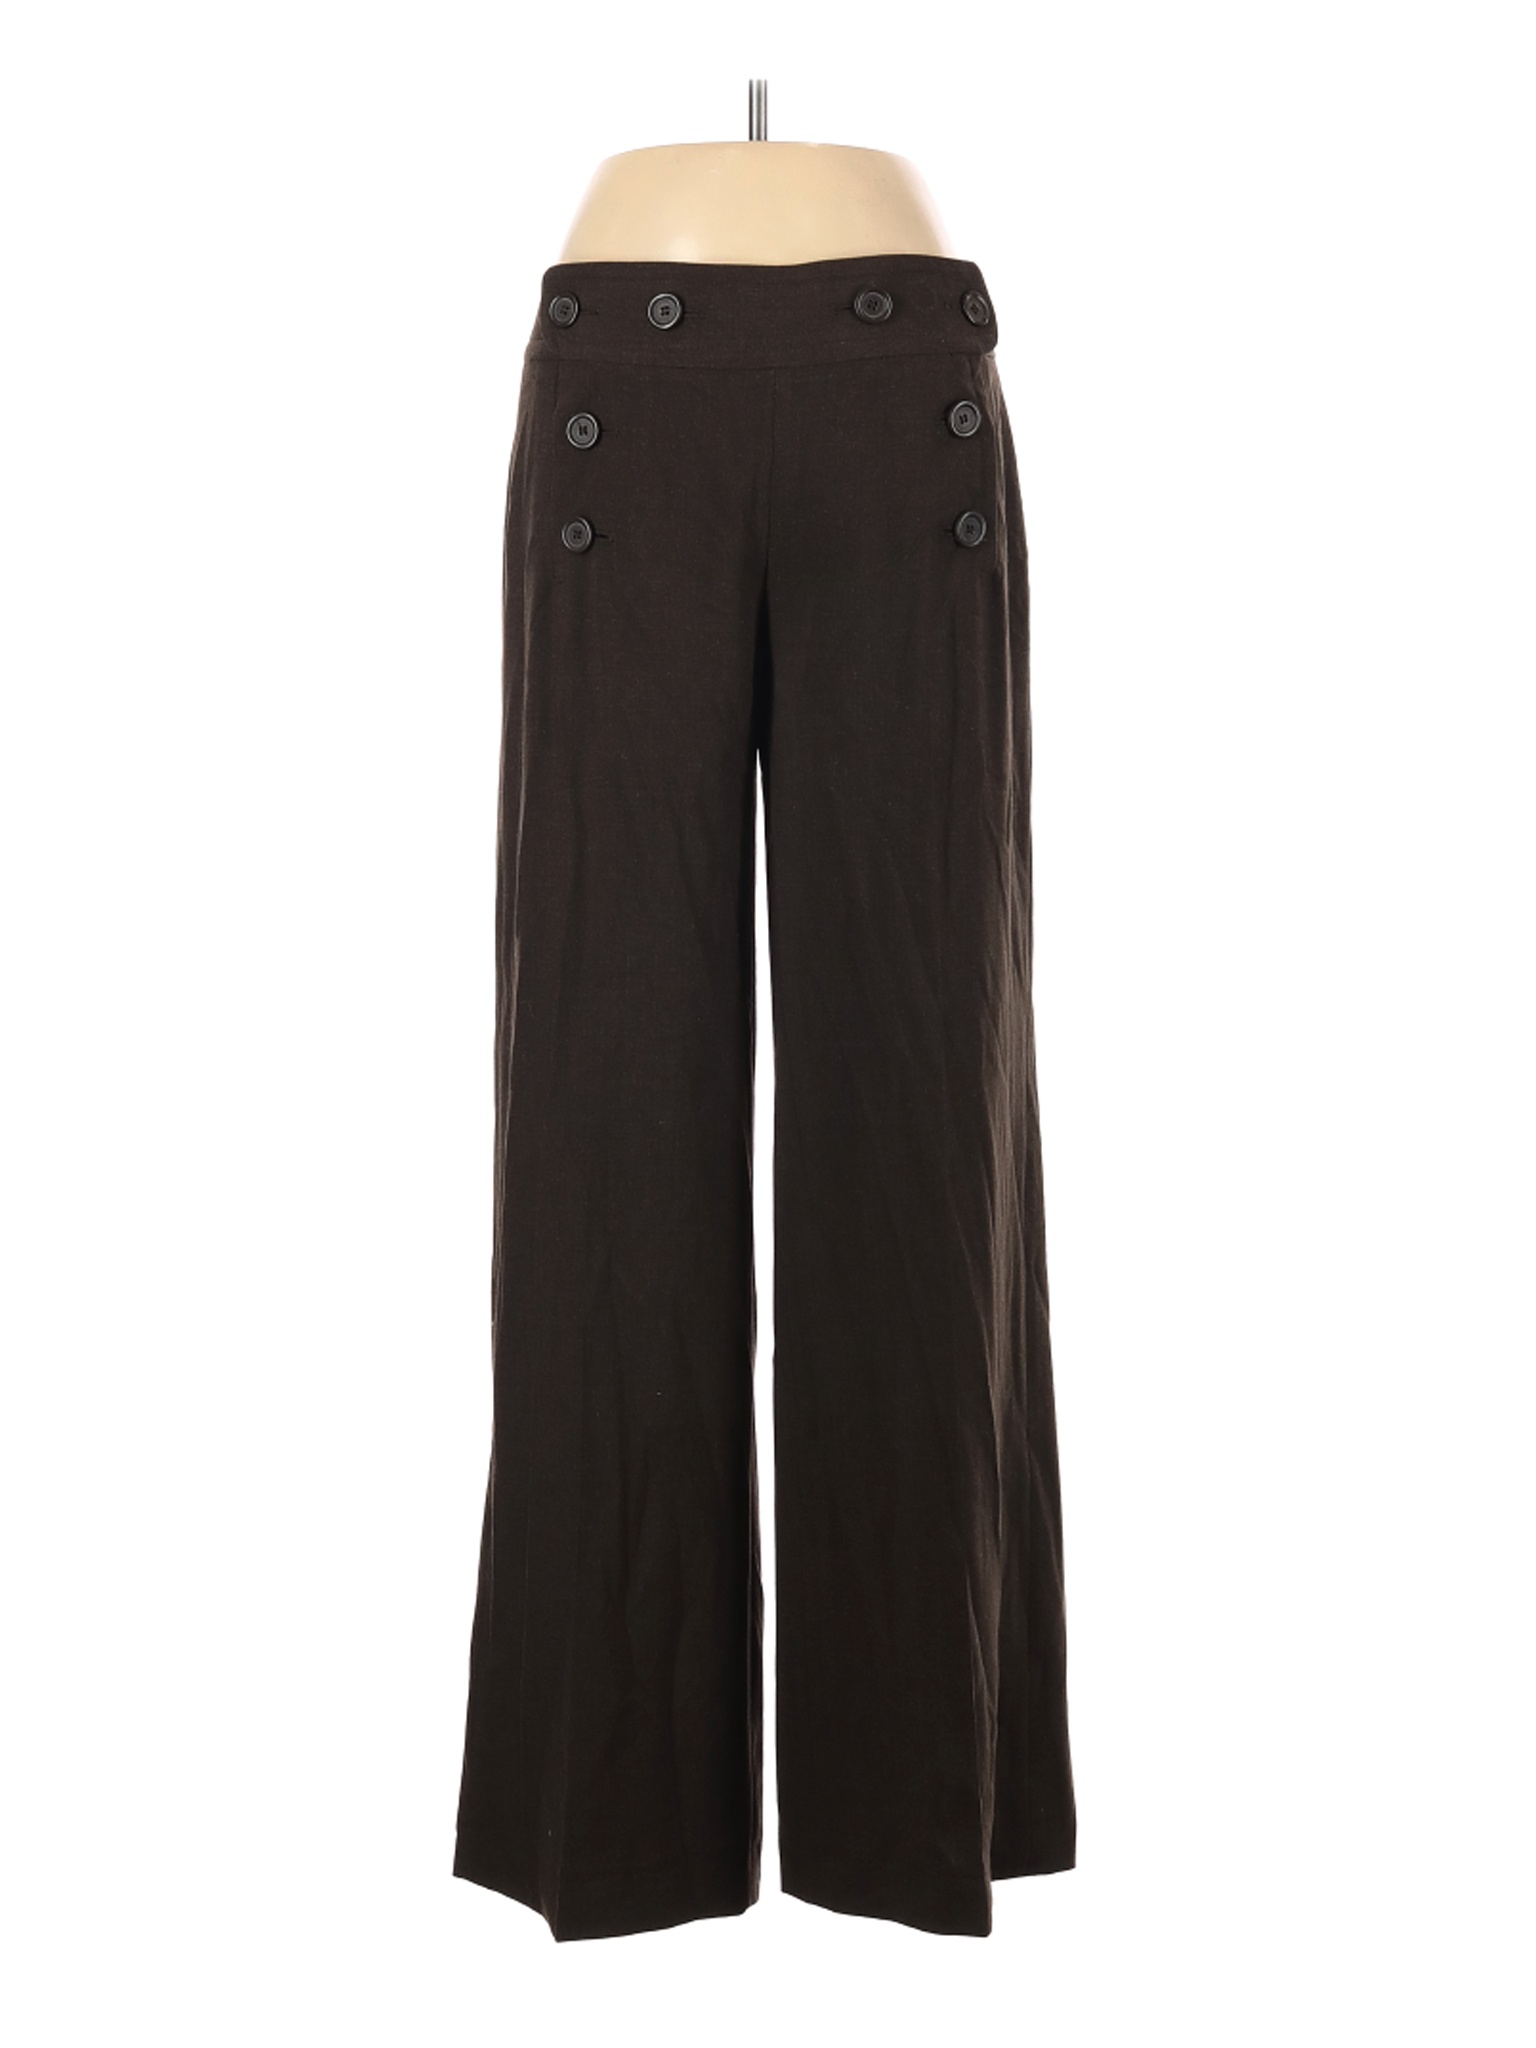 Max Studio Women Black Dress Pants 6 | eBay